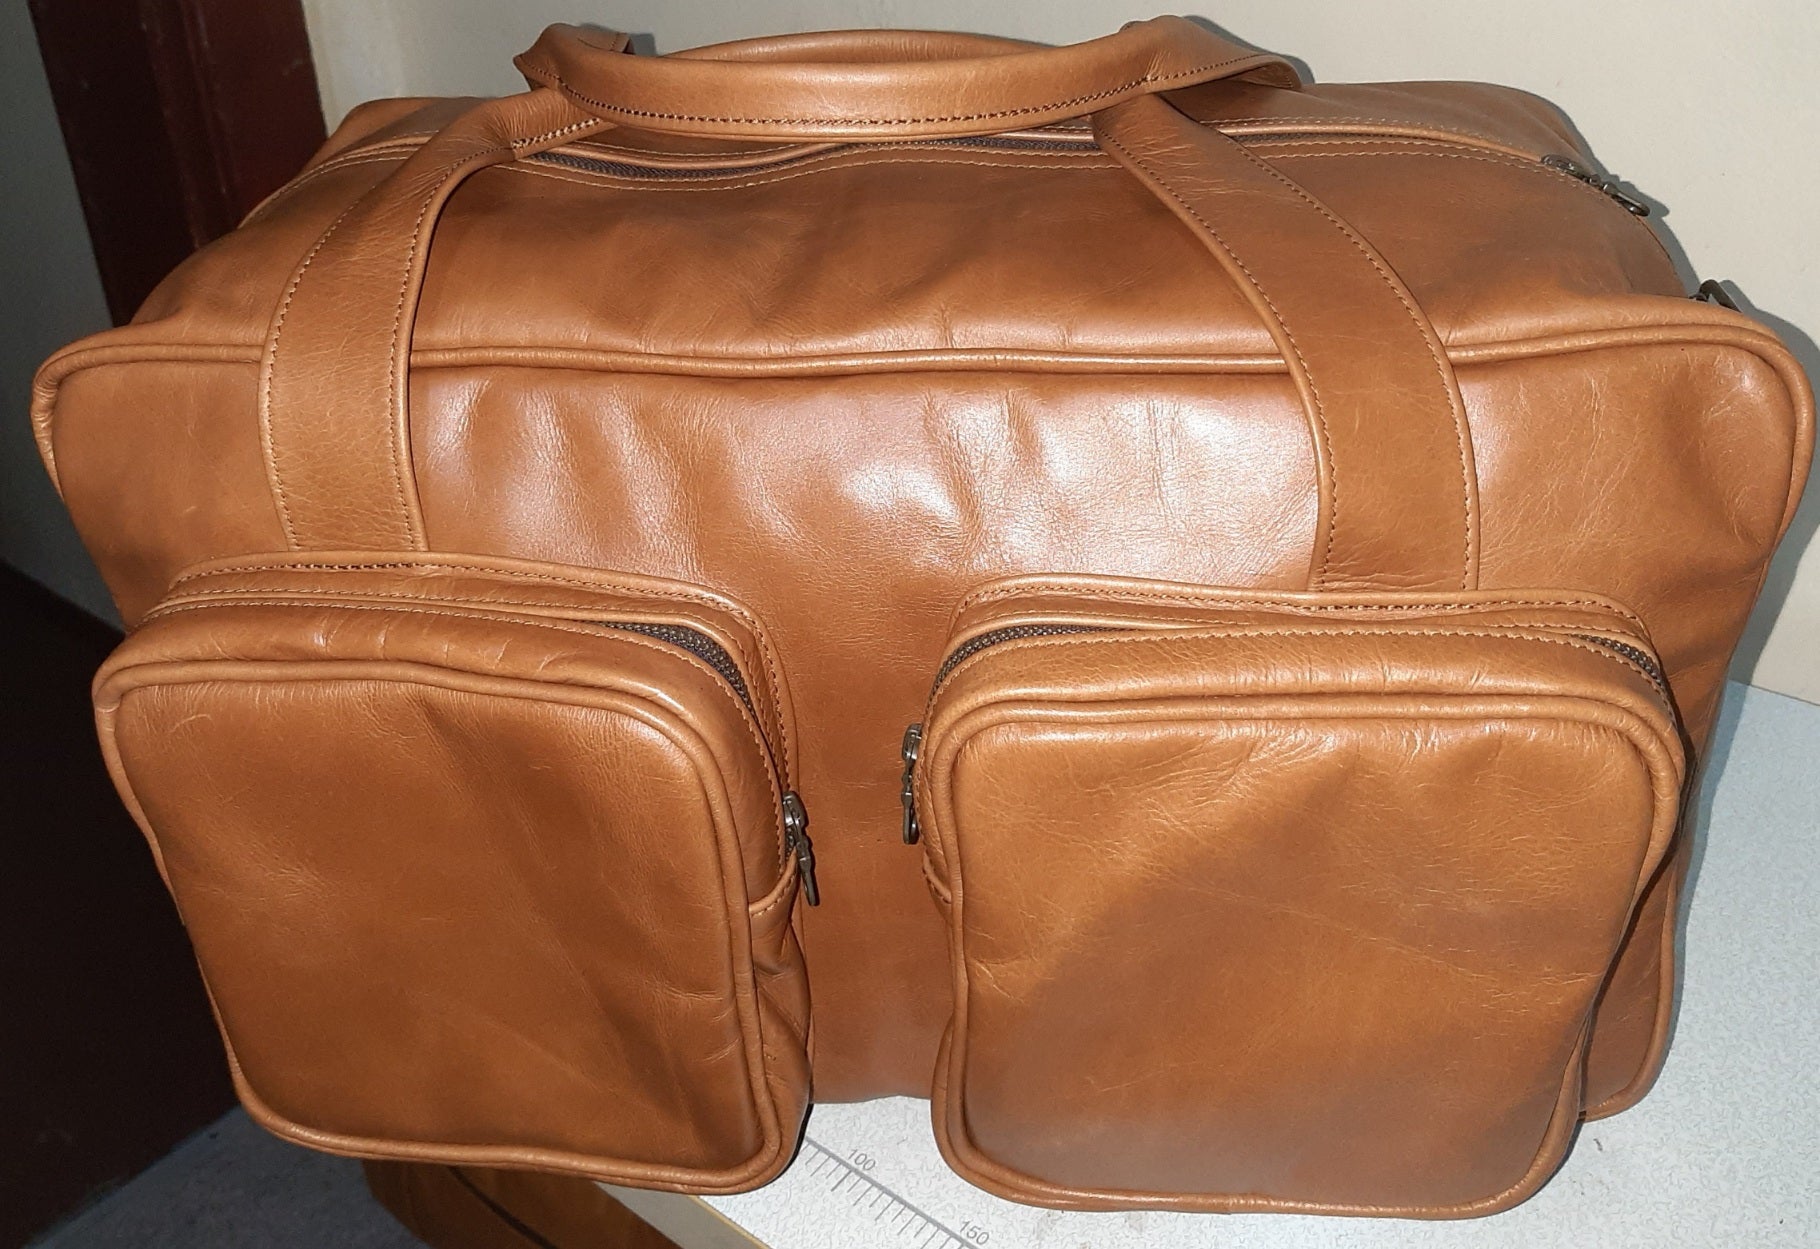 Centurion travel bags big - Cape Masai leather 